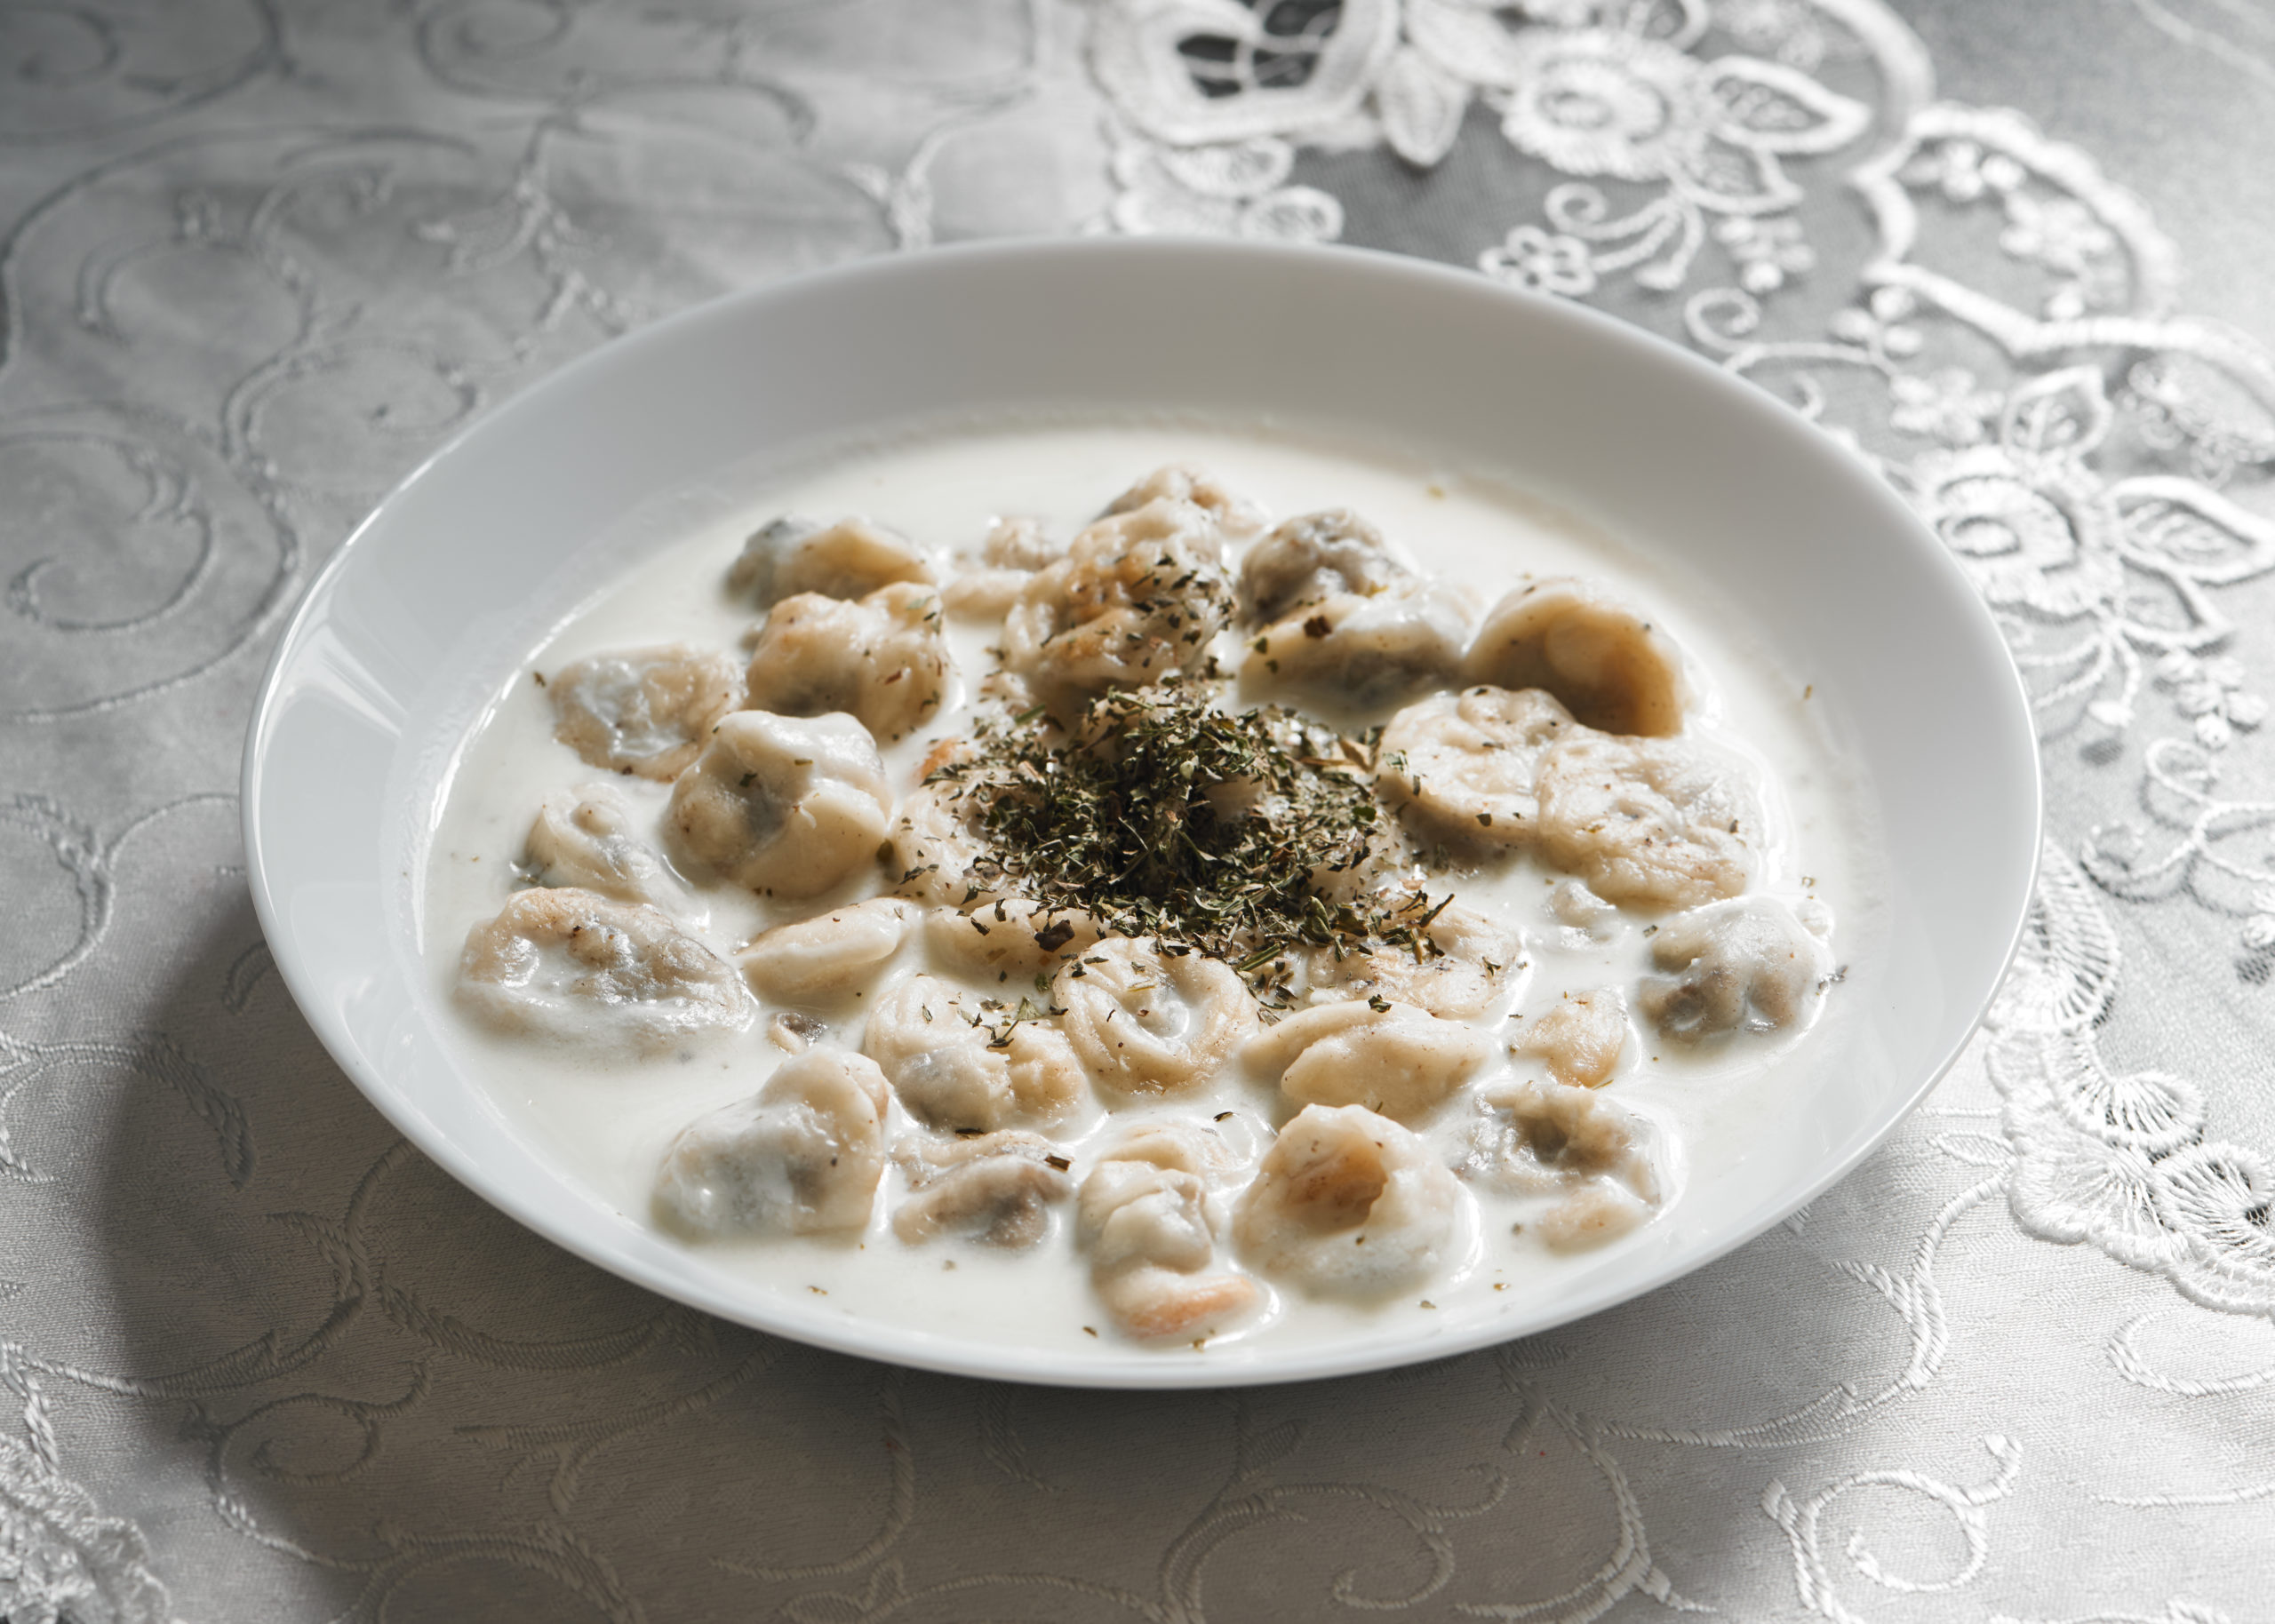 Palestinian dumplings in yogurt soup called shush barak